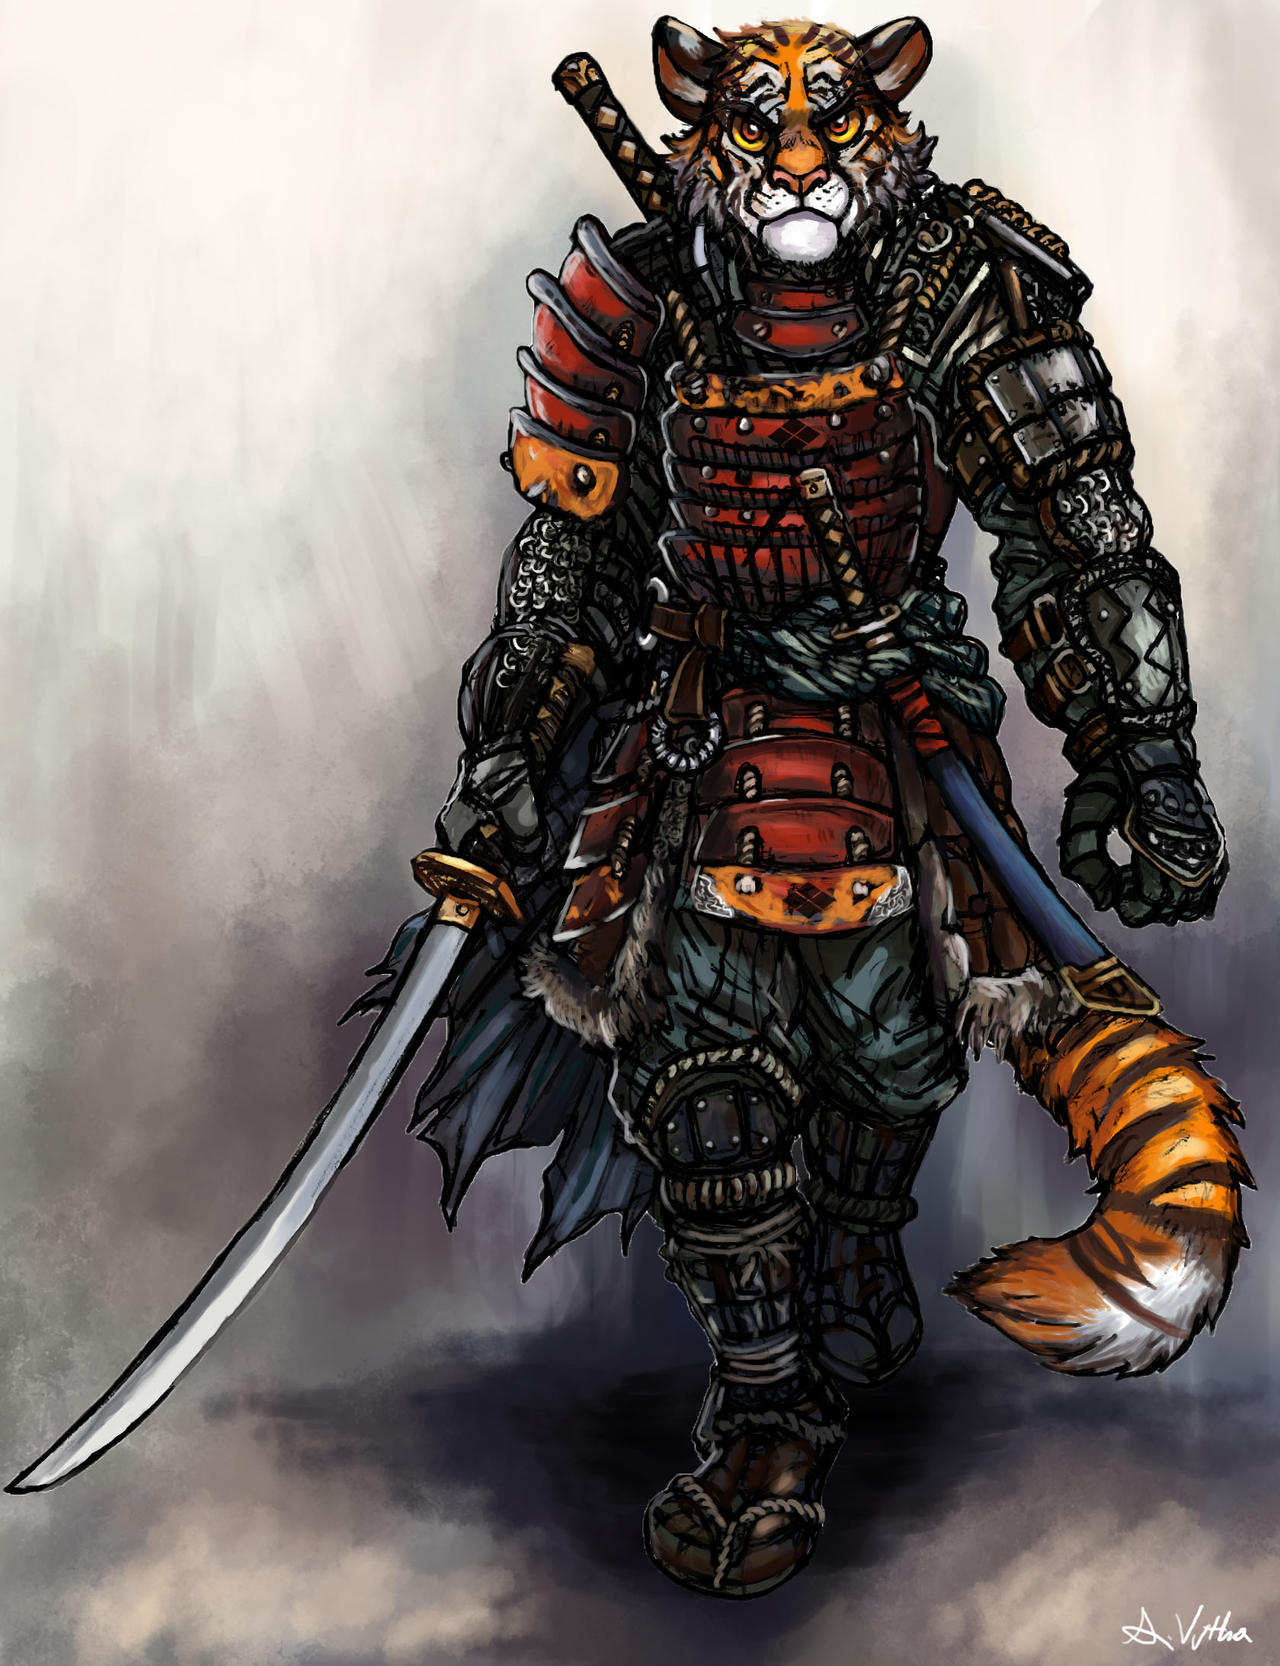 Tiger in samurai armor with sword drawn. https://www.deviantart.com/thelivingshadow/art/Tiger-Samurai-Hiroshi-Saito-649266108